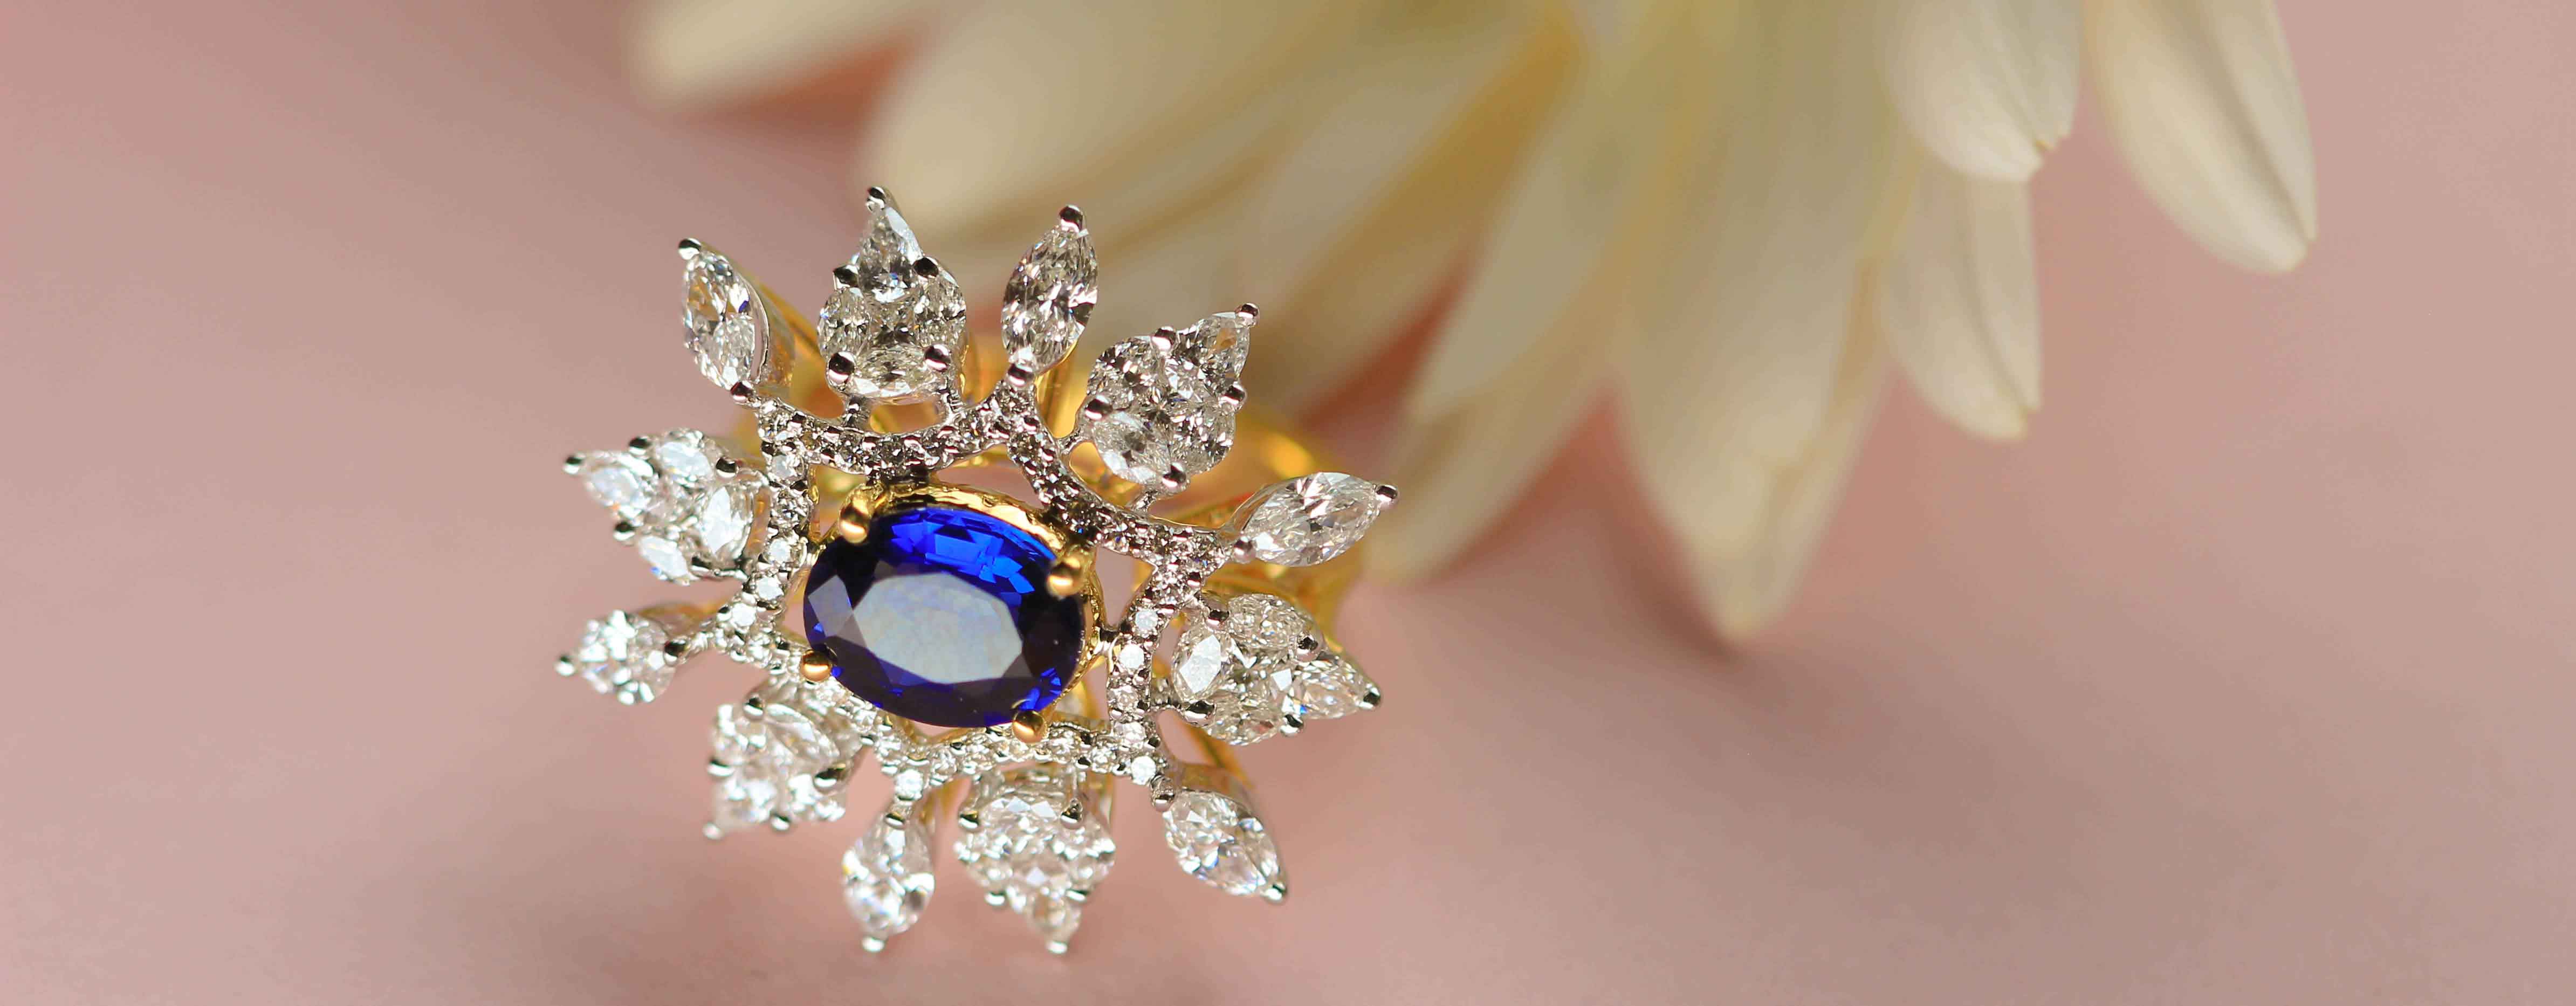 Home | Shailja's Diamond | Shailja's Diamond jewelery